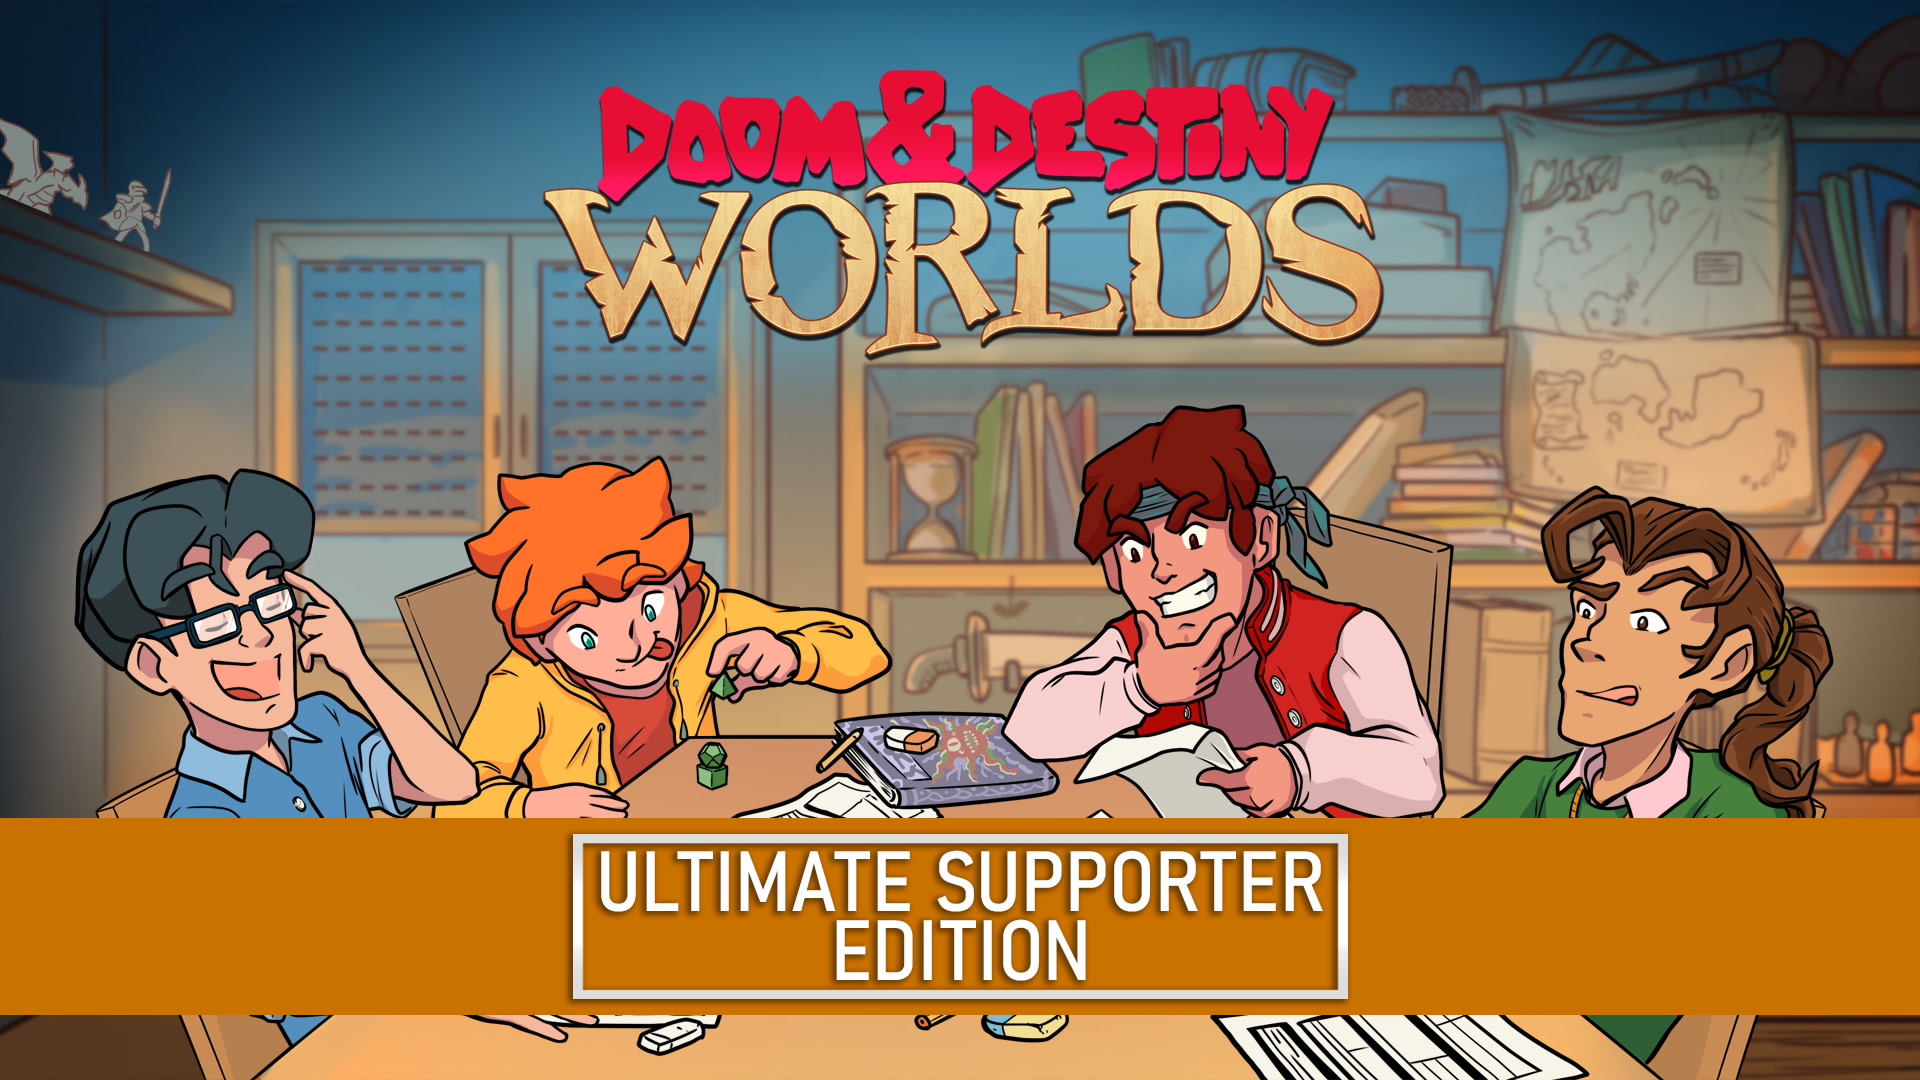 Doom & Destiny Worlds - Ultimate Supporter Edition